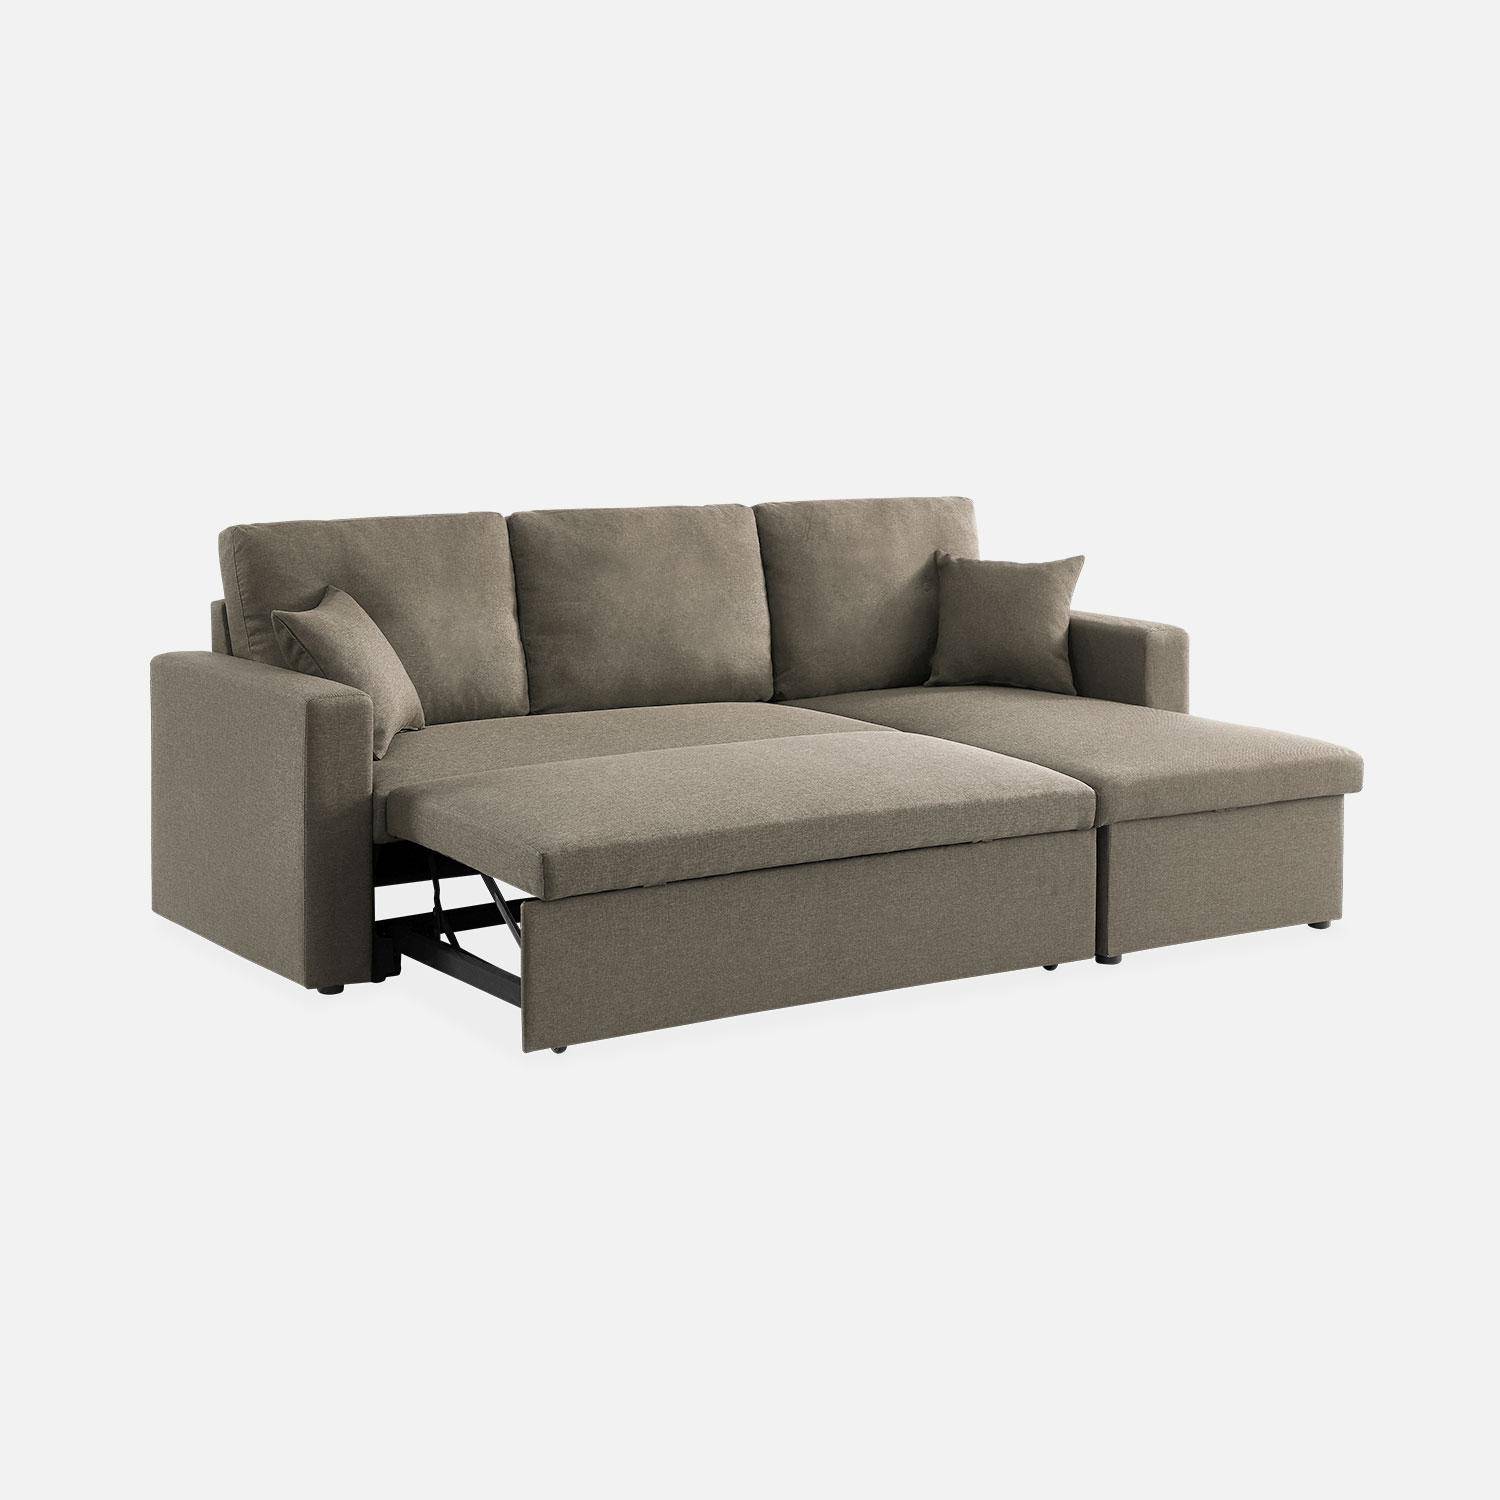 3-seater reversible brown corner sofa bed with storage box, brown, L219xD81xH68cm, IDA Photo9